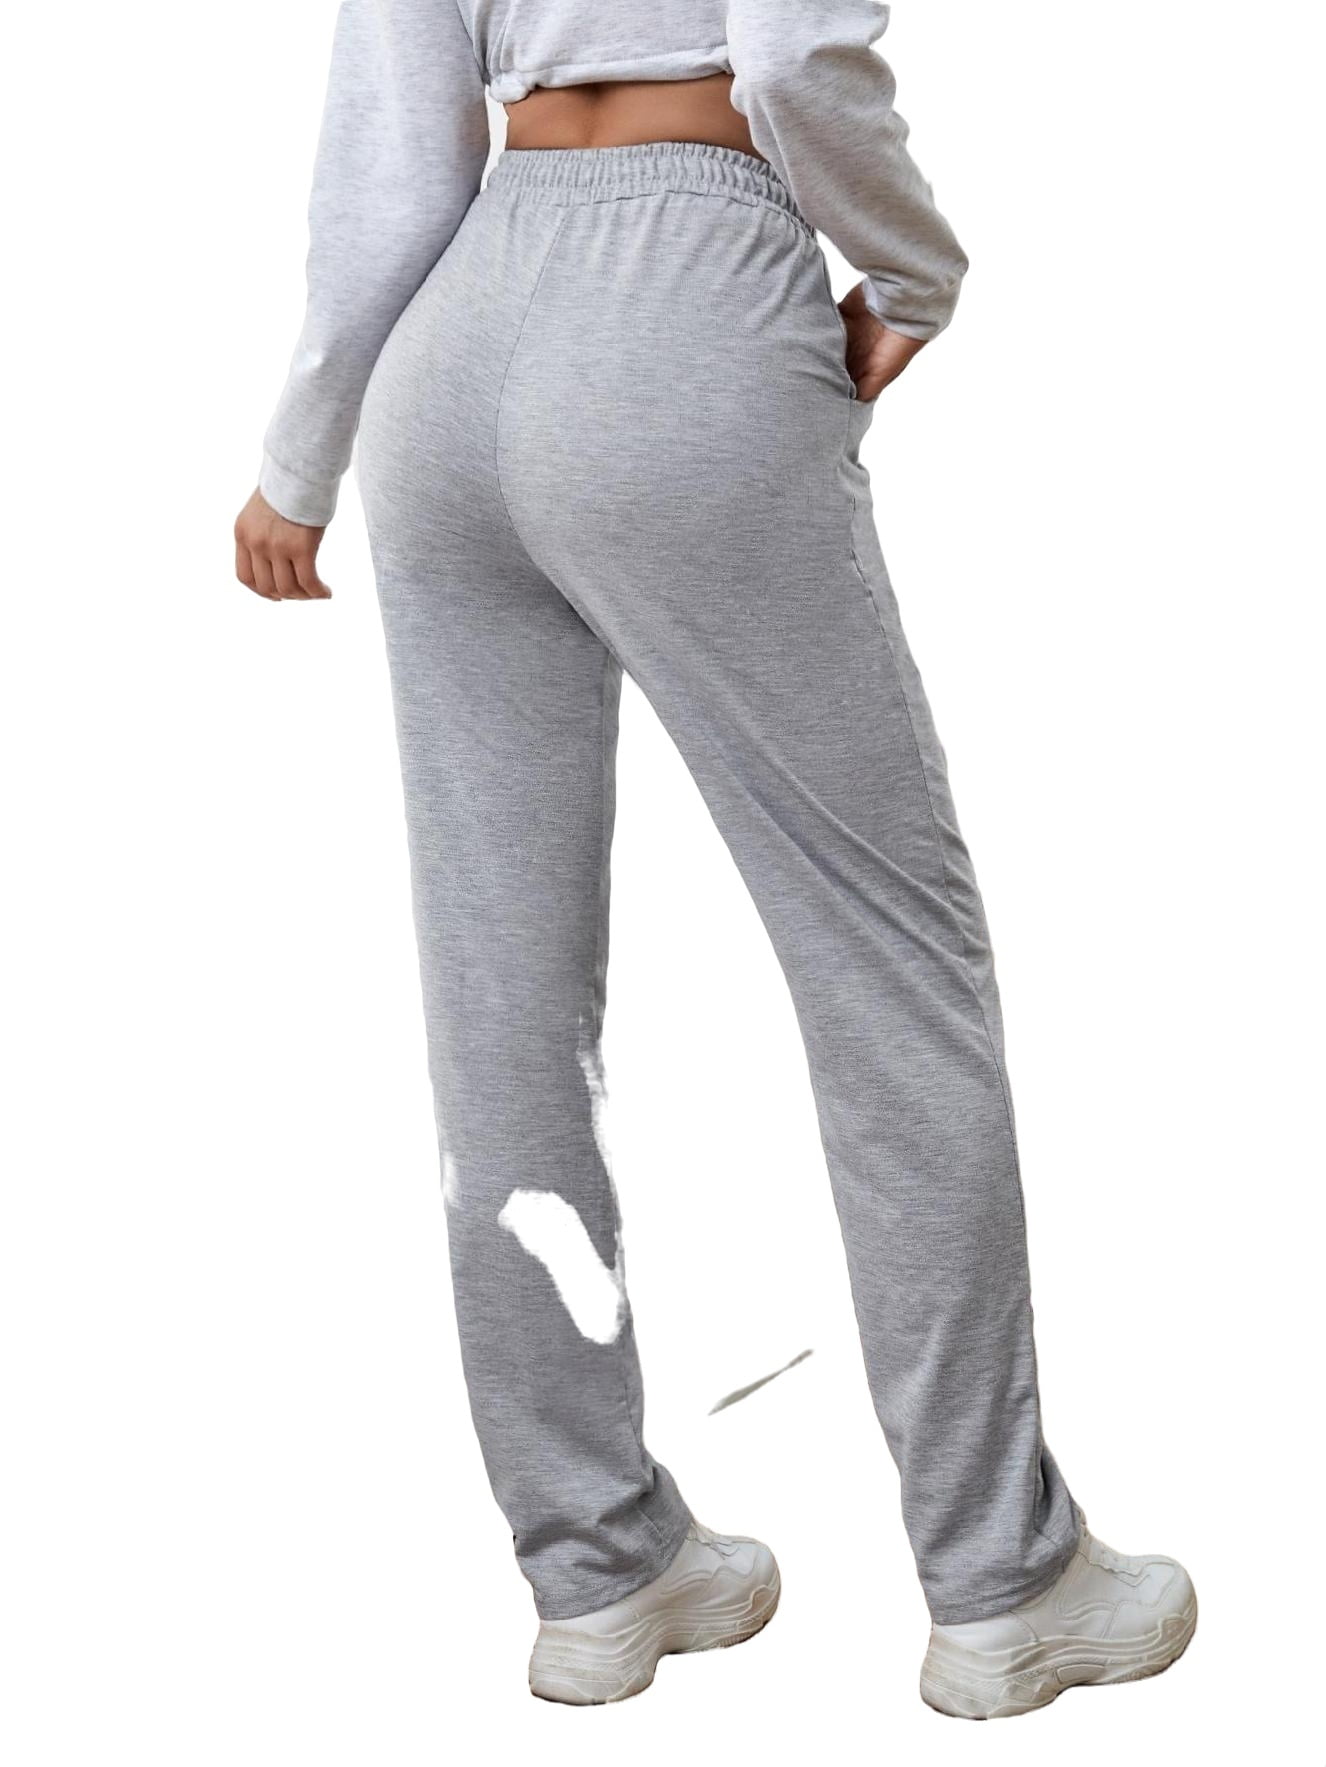 Womens Casual Pants Elastic Waist Solid Sweatpants Grey L